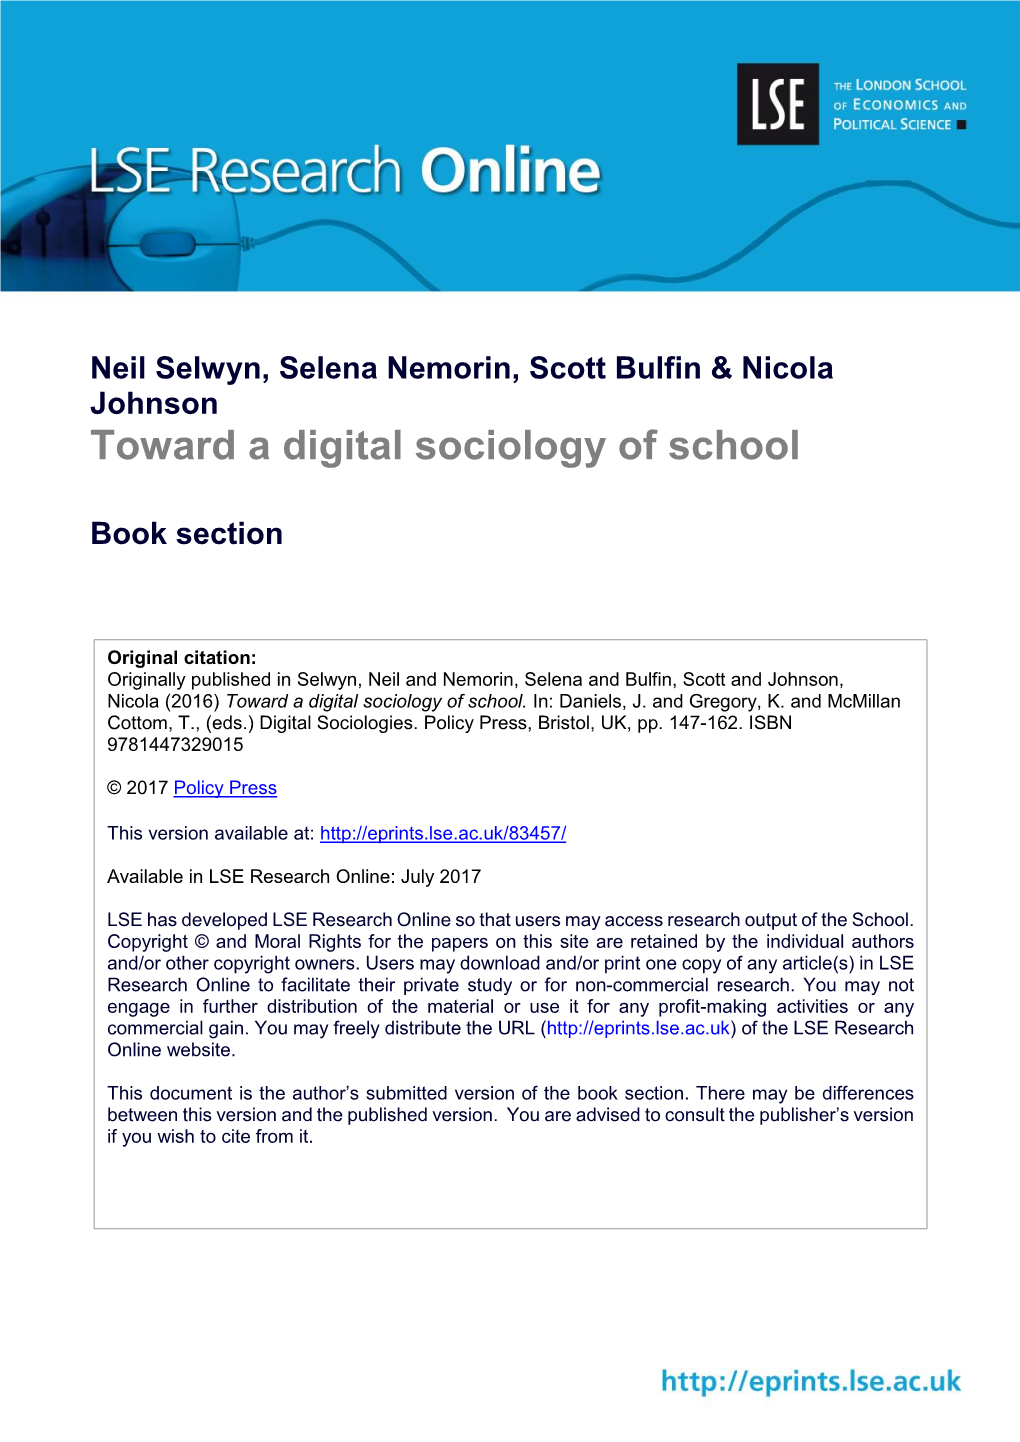 Toward a Digital Sociology of School